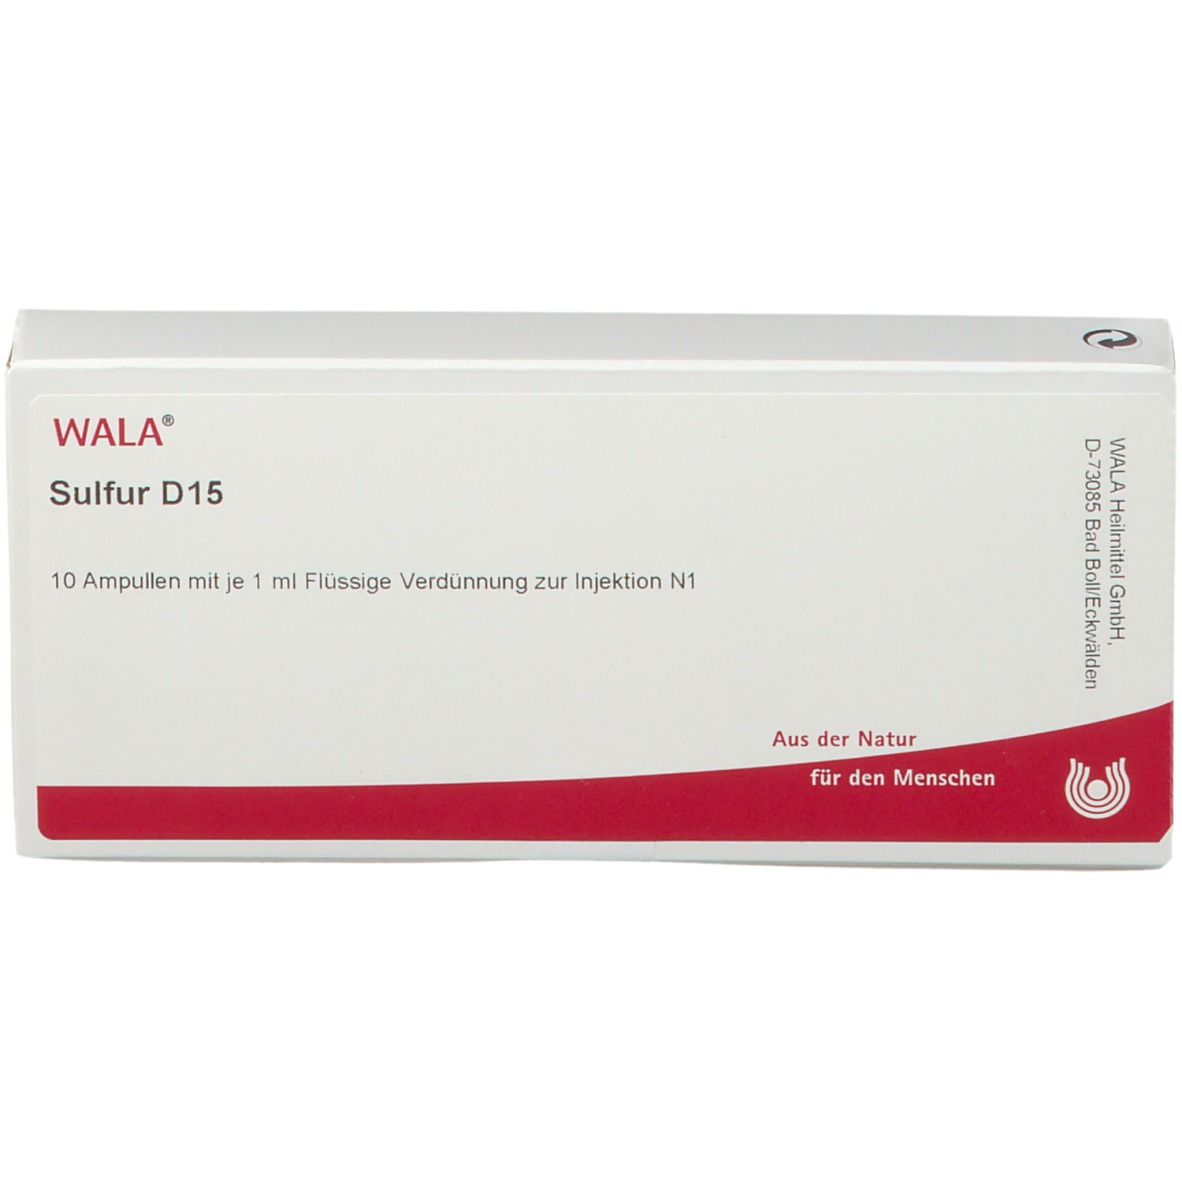 WALA® Sulfur D 15